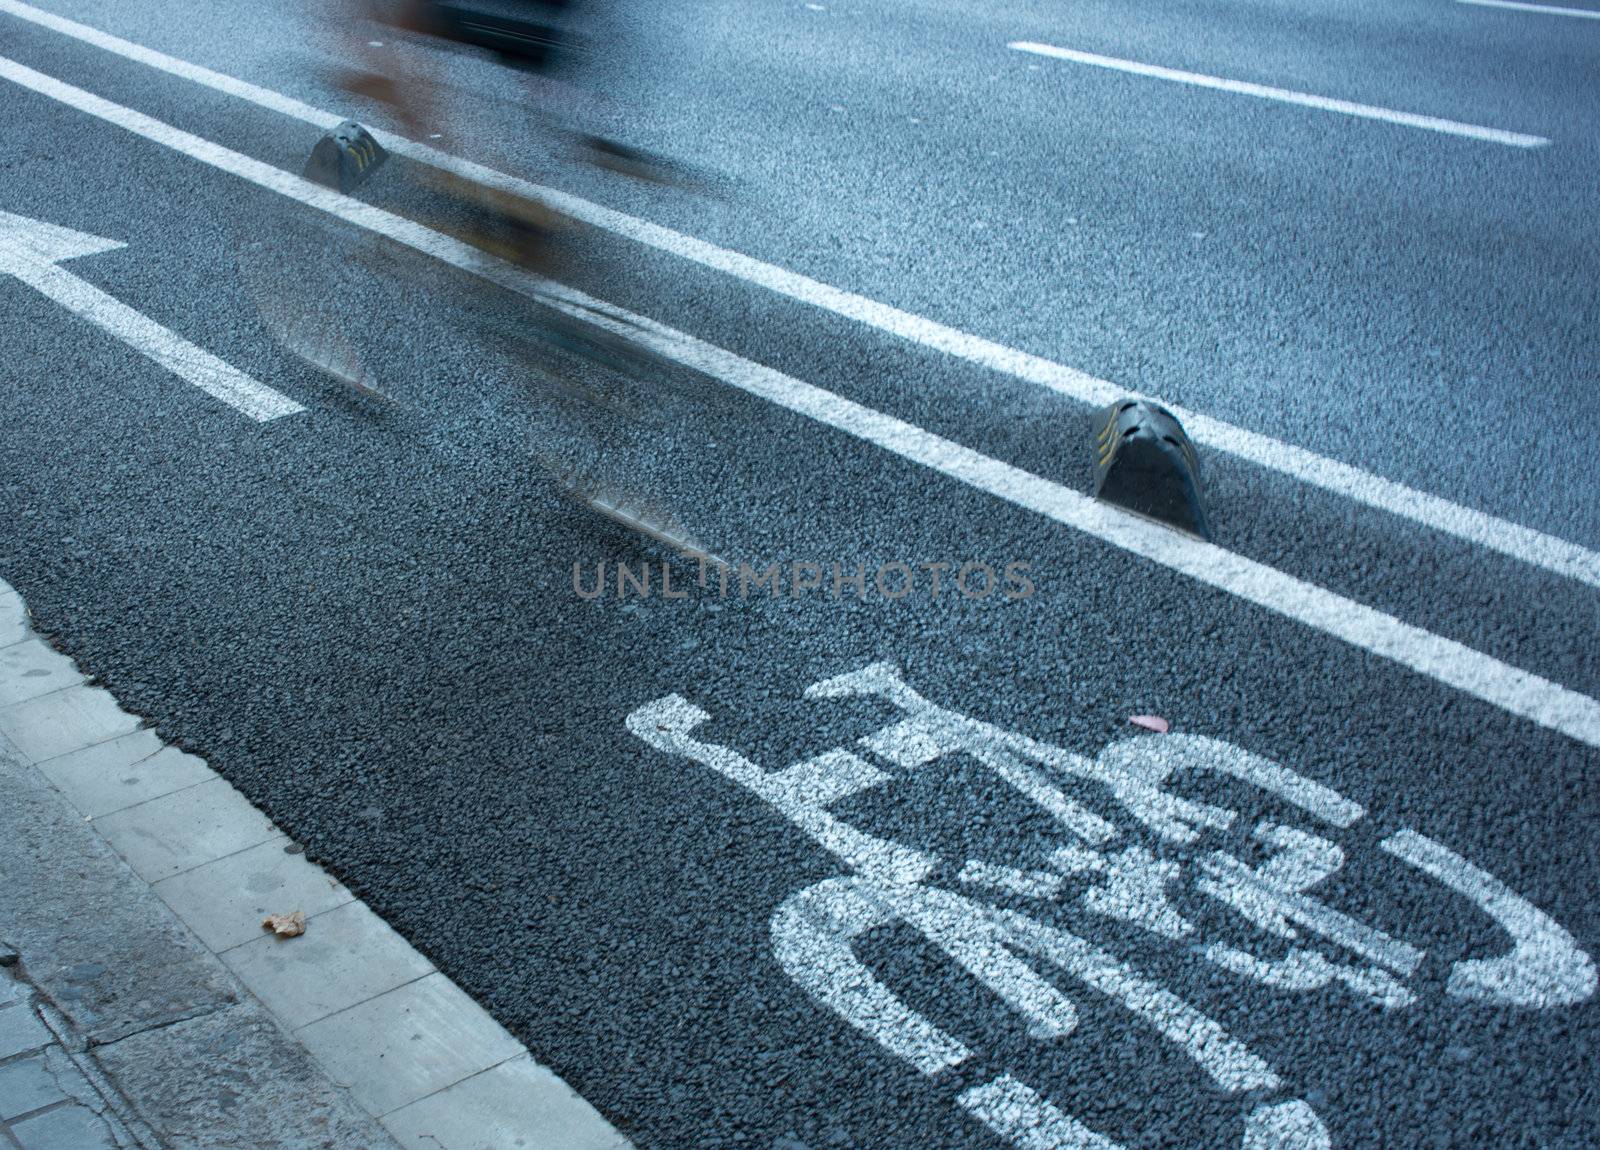 Speedy ciclyst on urban cycle lane.